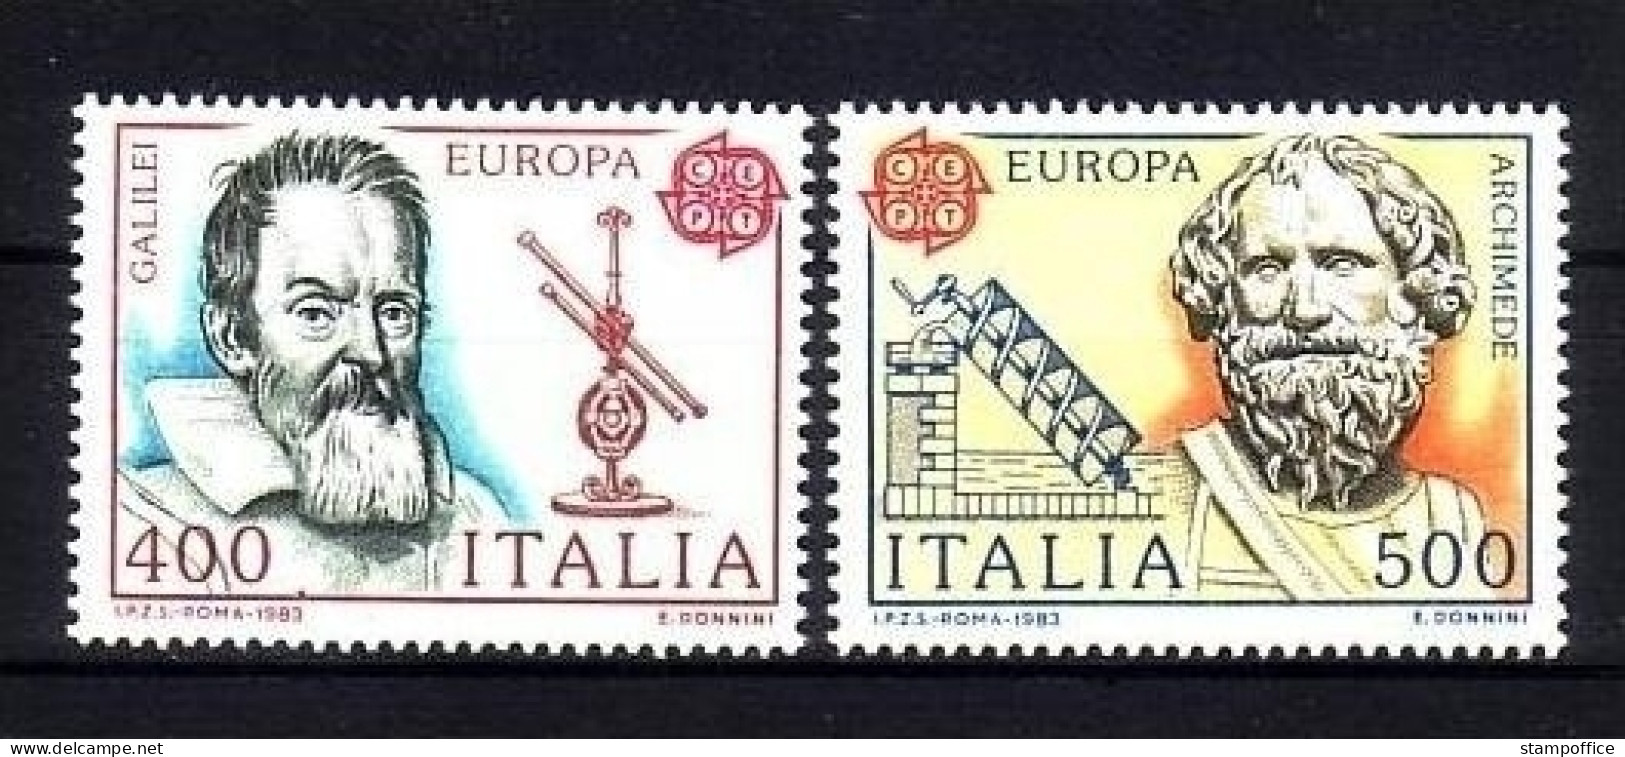 ITALIEN MI-NR. 1842-1843 POSTFRISCH(MINT) EUROPA 1983 GROSSE WERKE GALILEI ARCHIMEDES - 1983